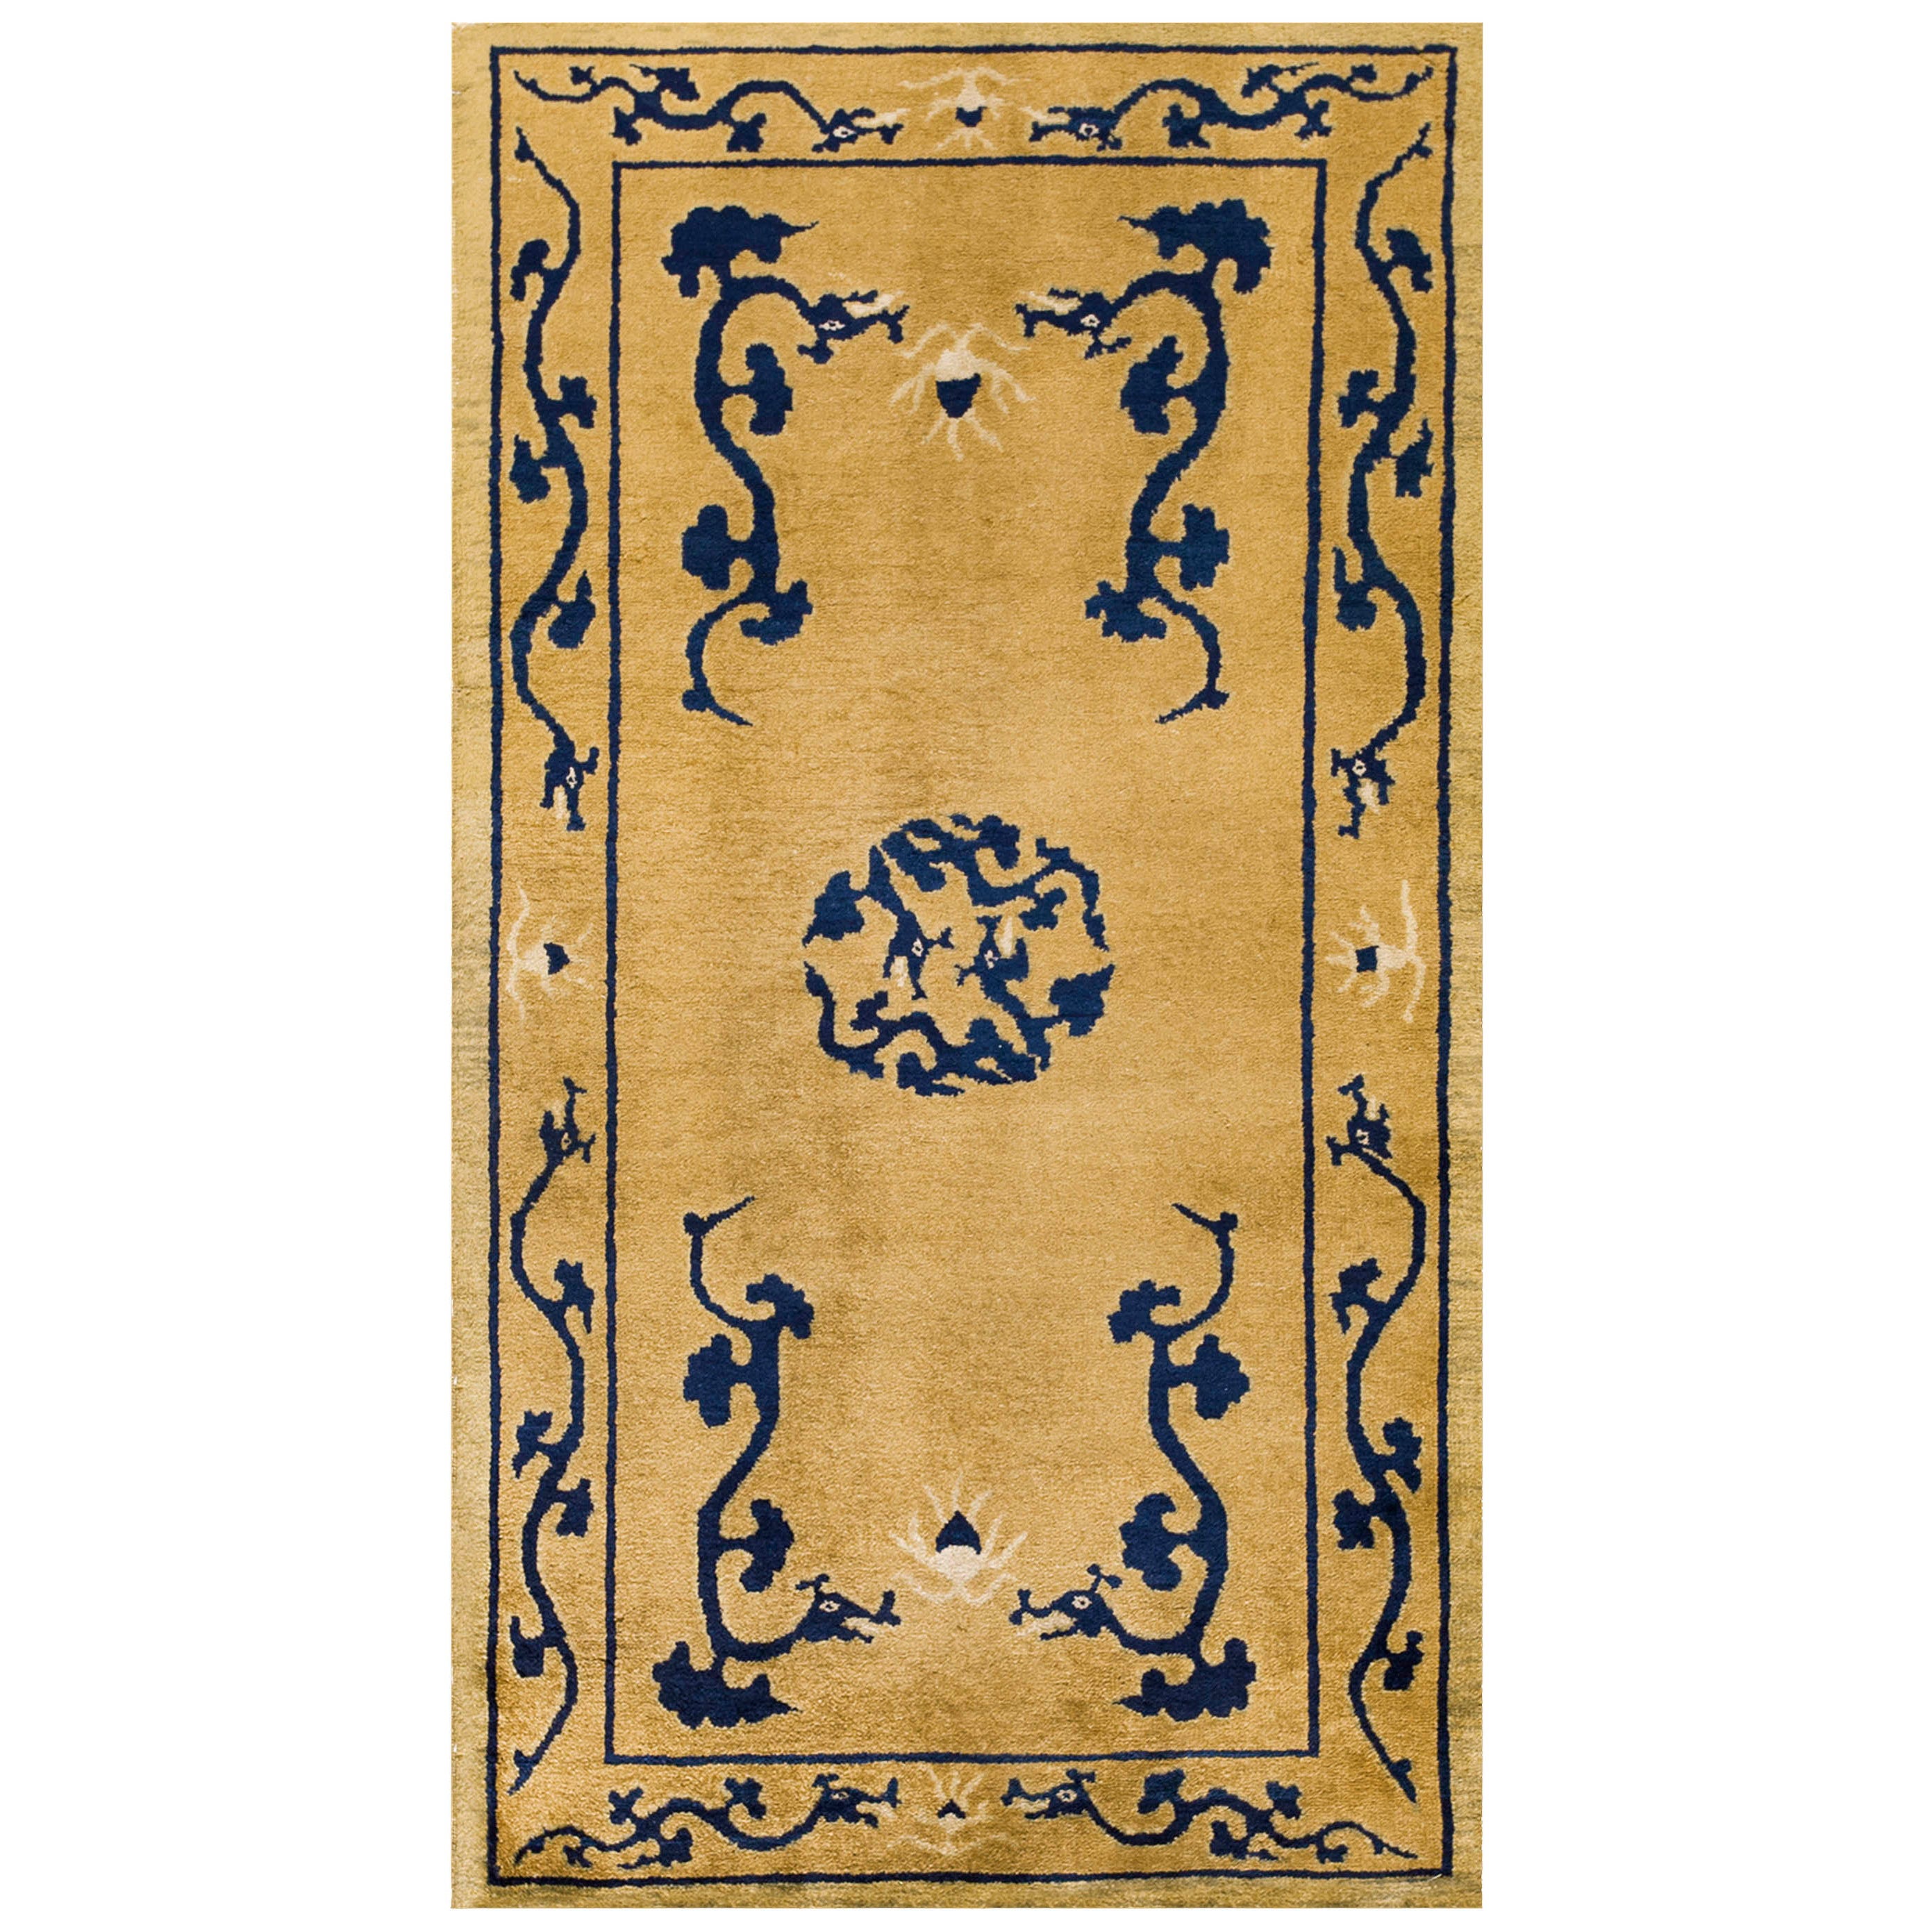 Early 20th Century Chinese Peking Dragon Carpet ( 3'4'' x 6' - 102 x 183 )